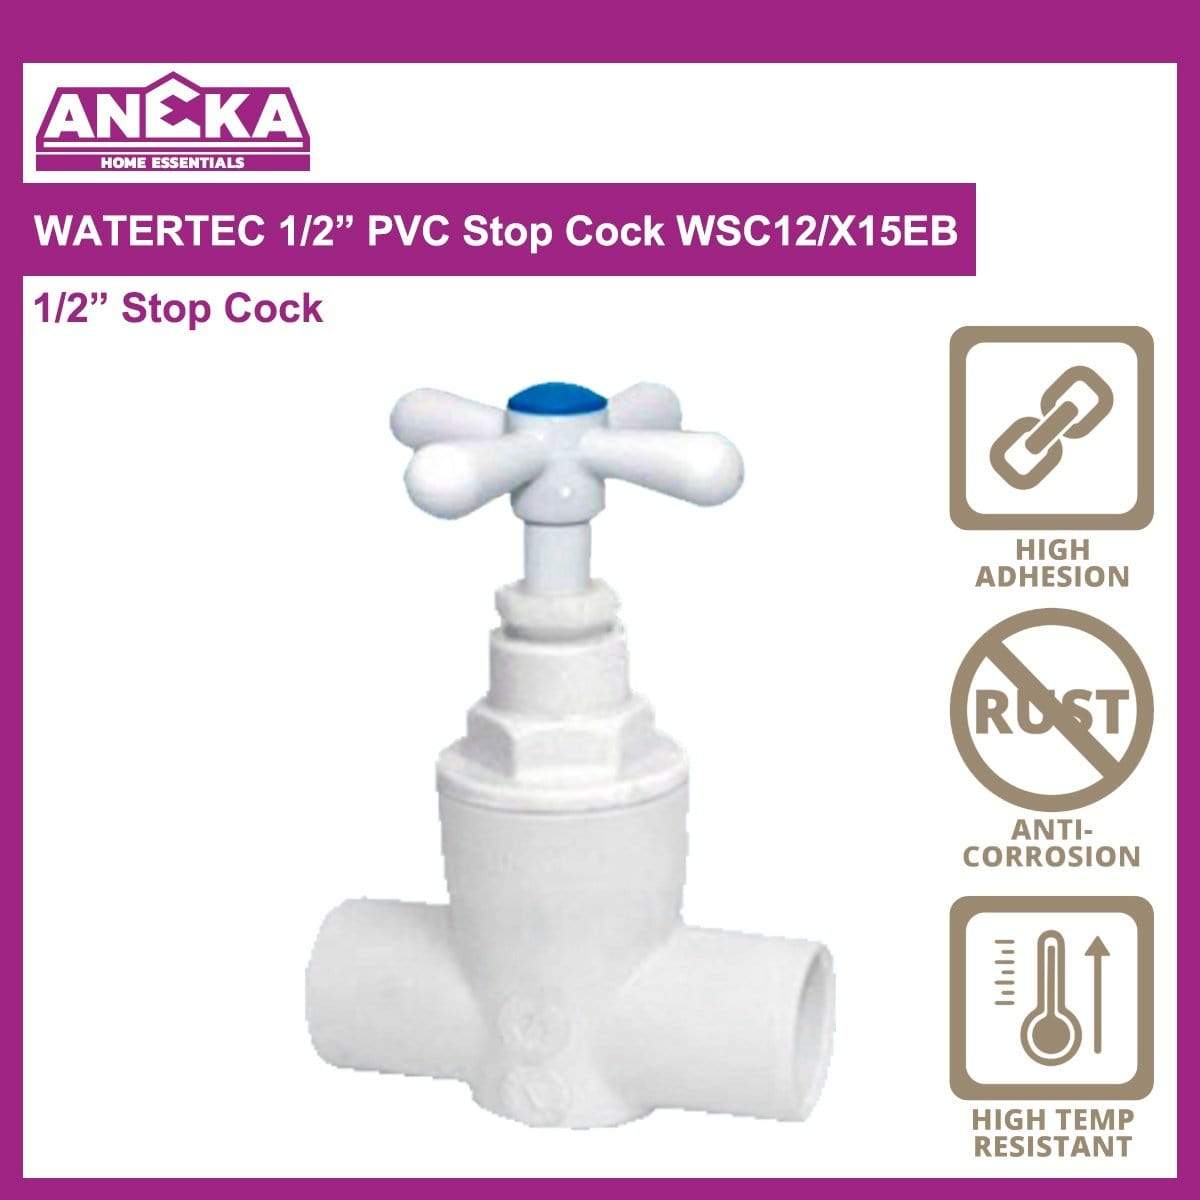 WATERTEC 1/2" PVC Stop Cock WSC12/X15EB